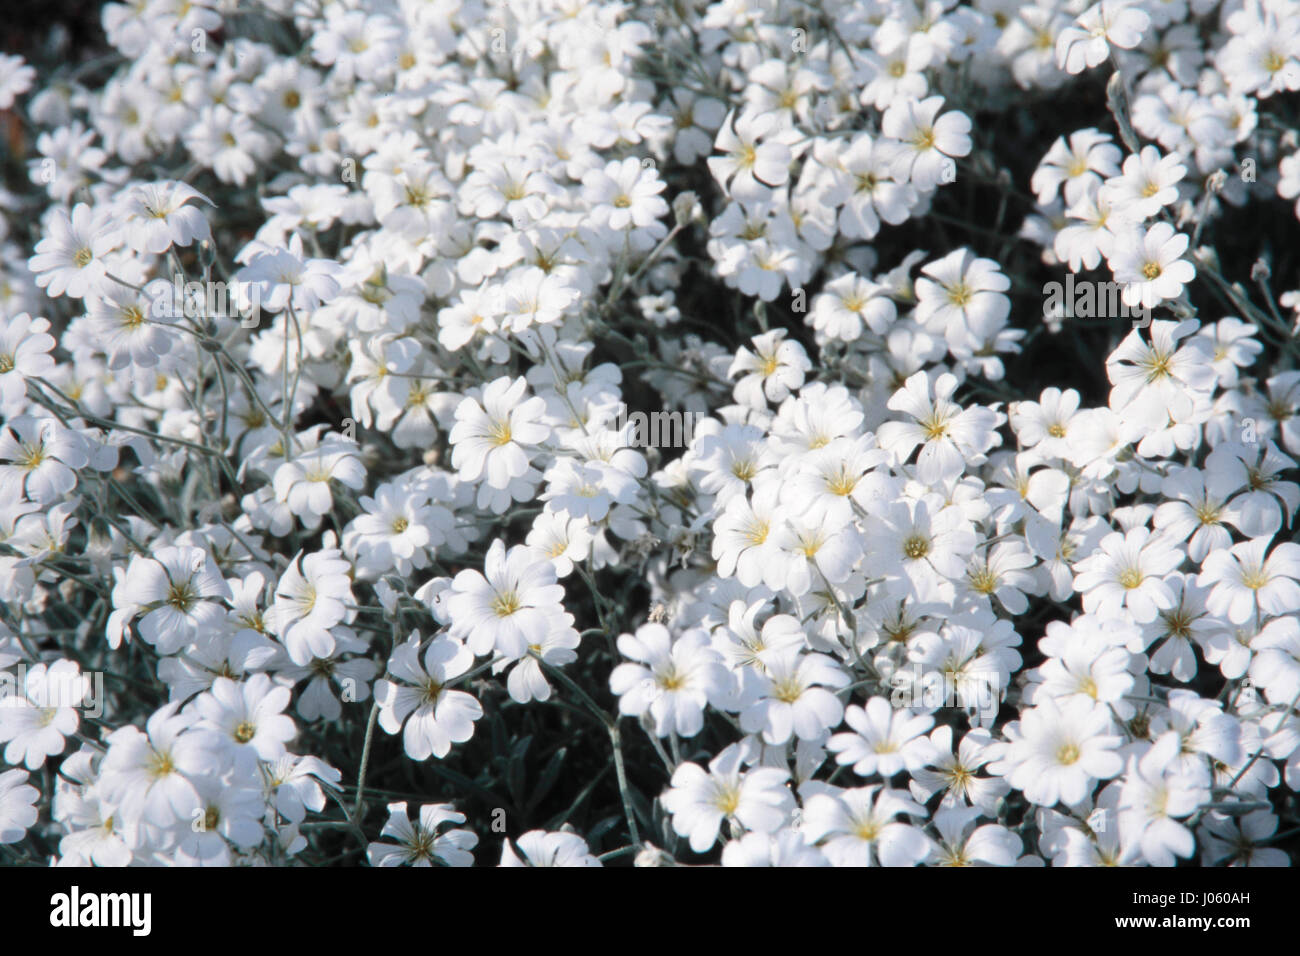 White flowers, sweden Stock Photo